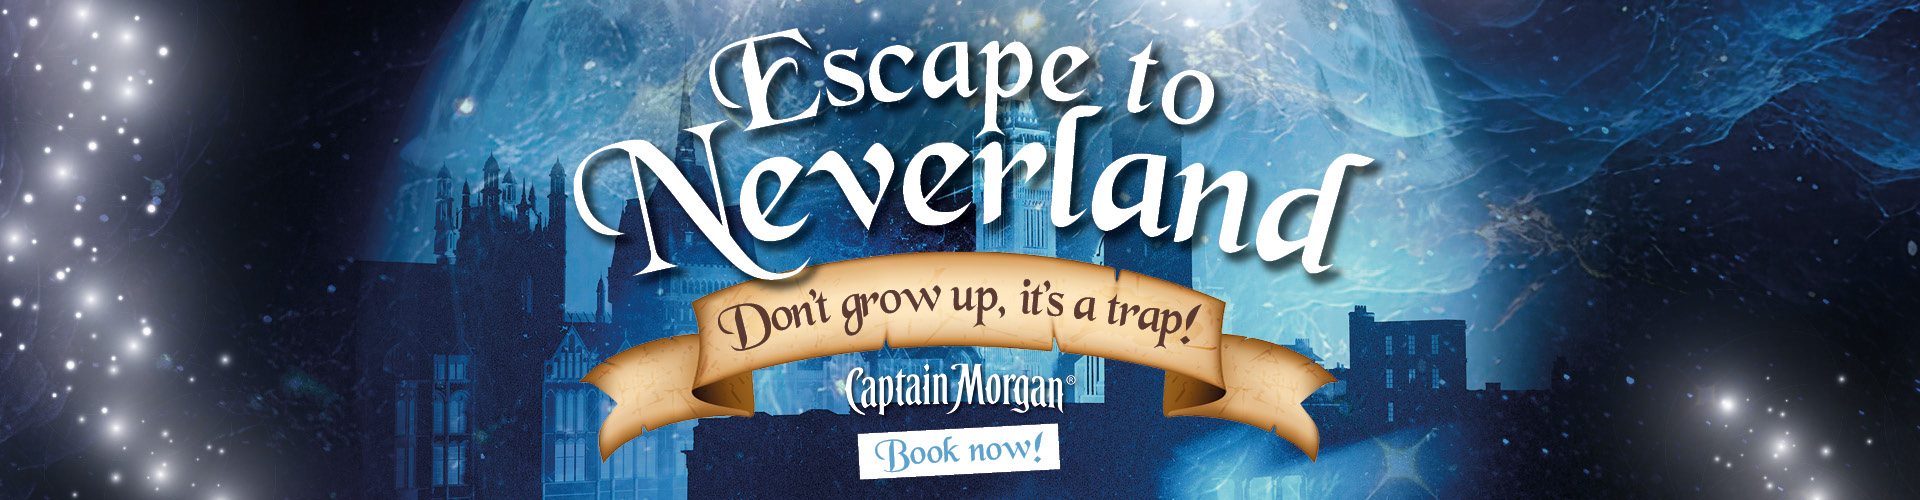 Escape to Neverland this NYE at Popworld & Zinc Weston-Super-Mare